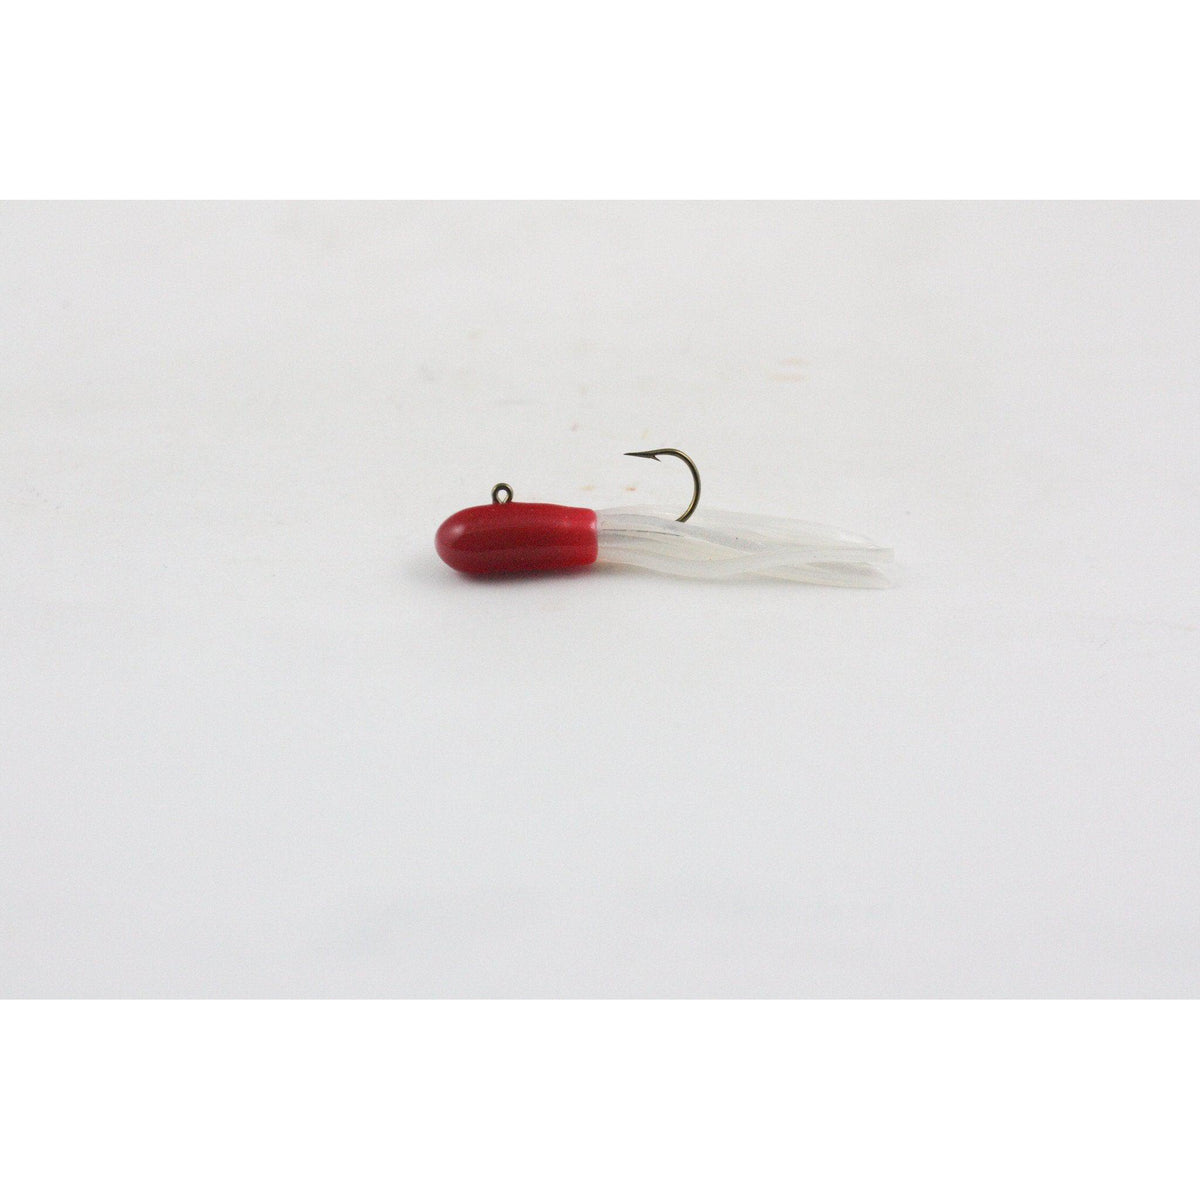 7G 1/4Oz Japanese Mini Fishing Jigs With Treble Hook, Micro